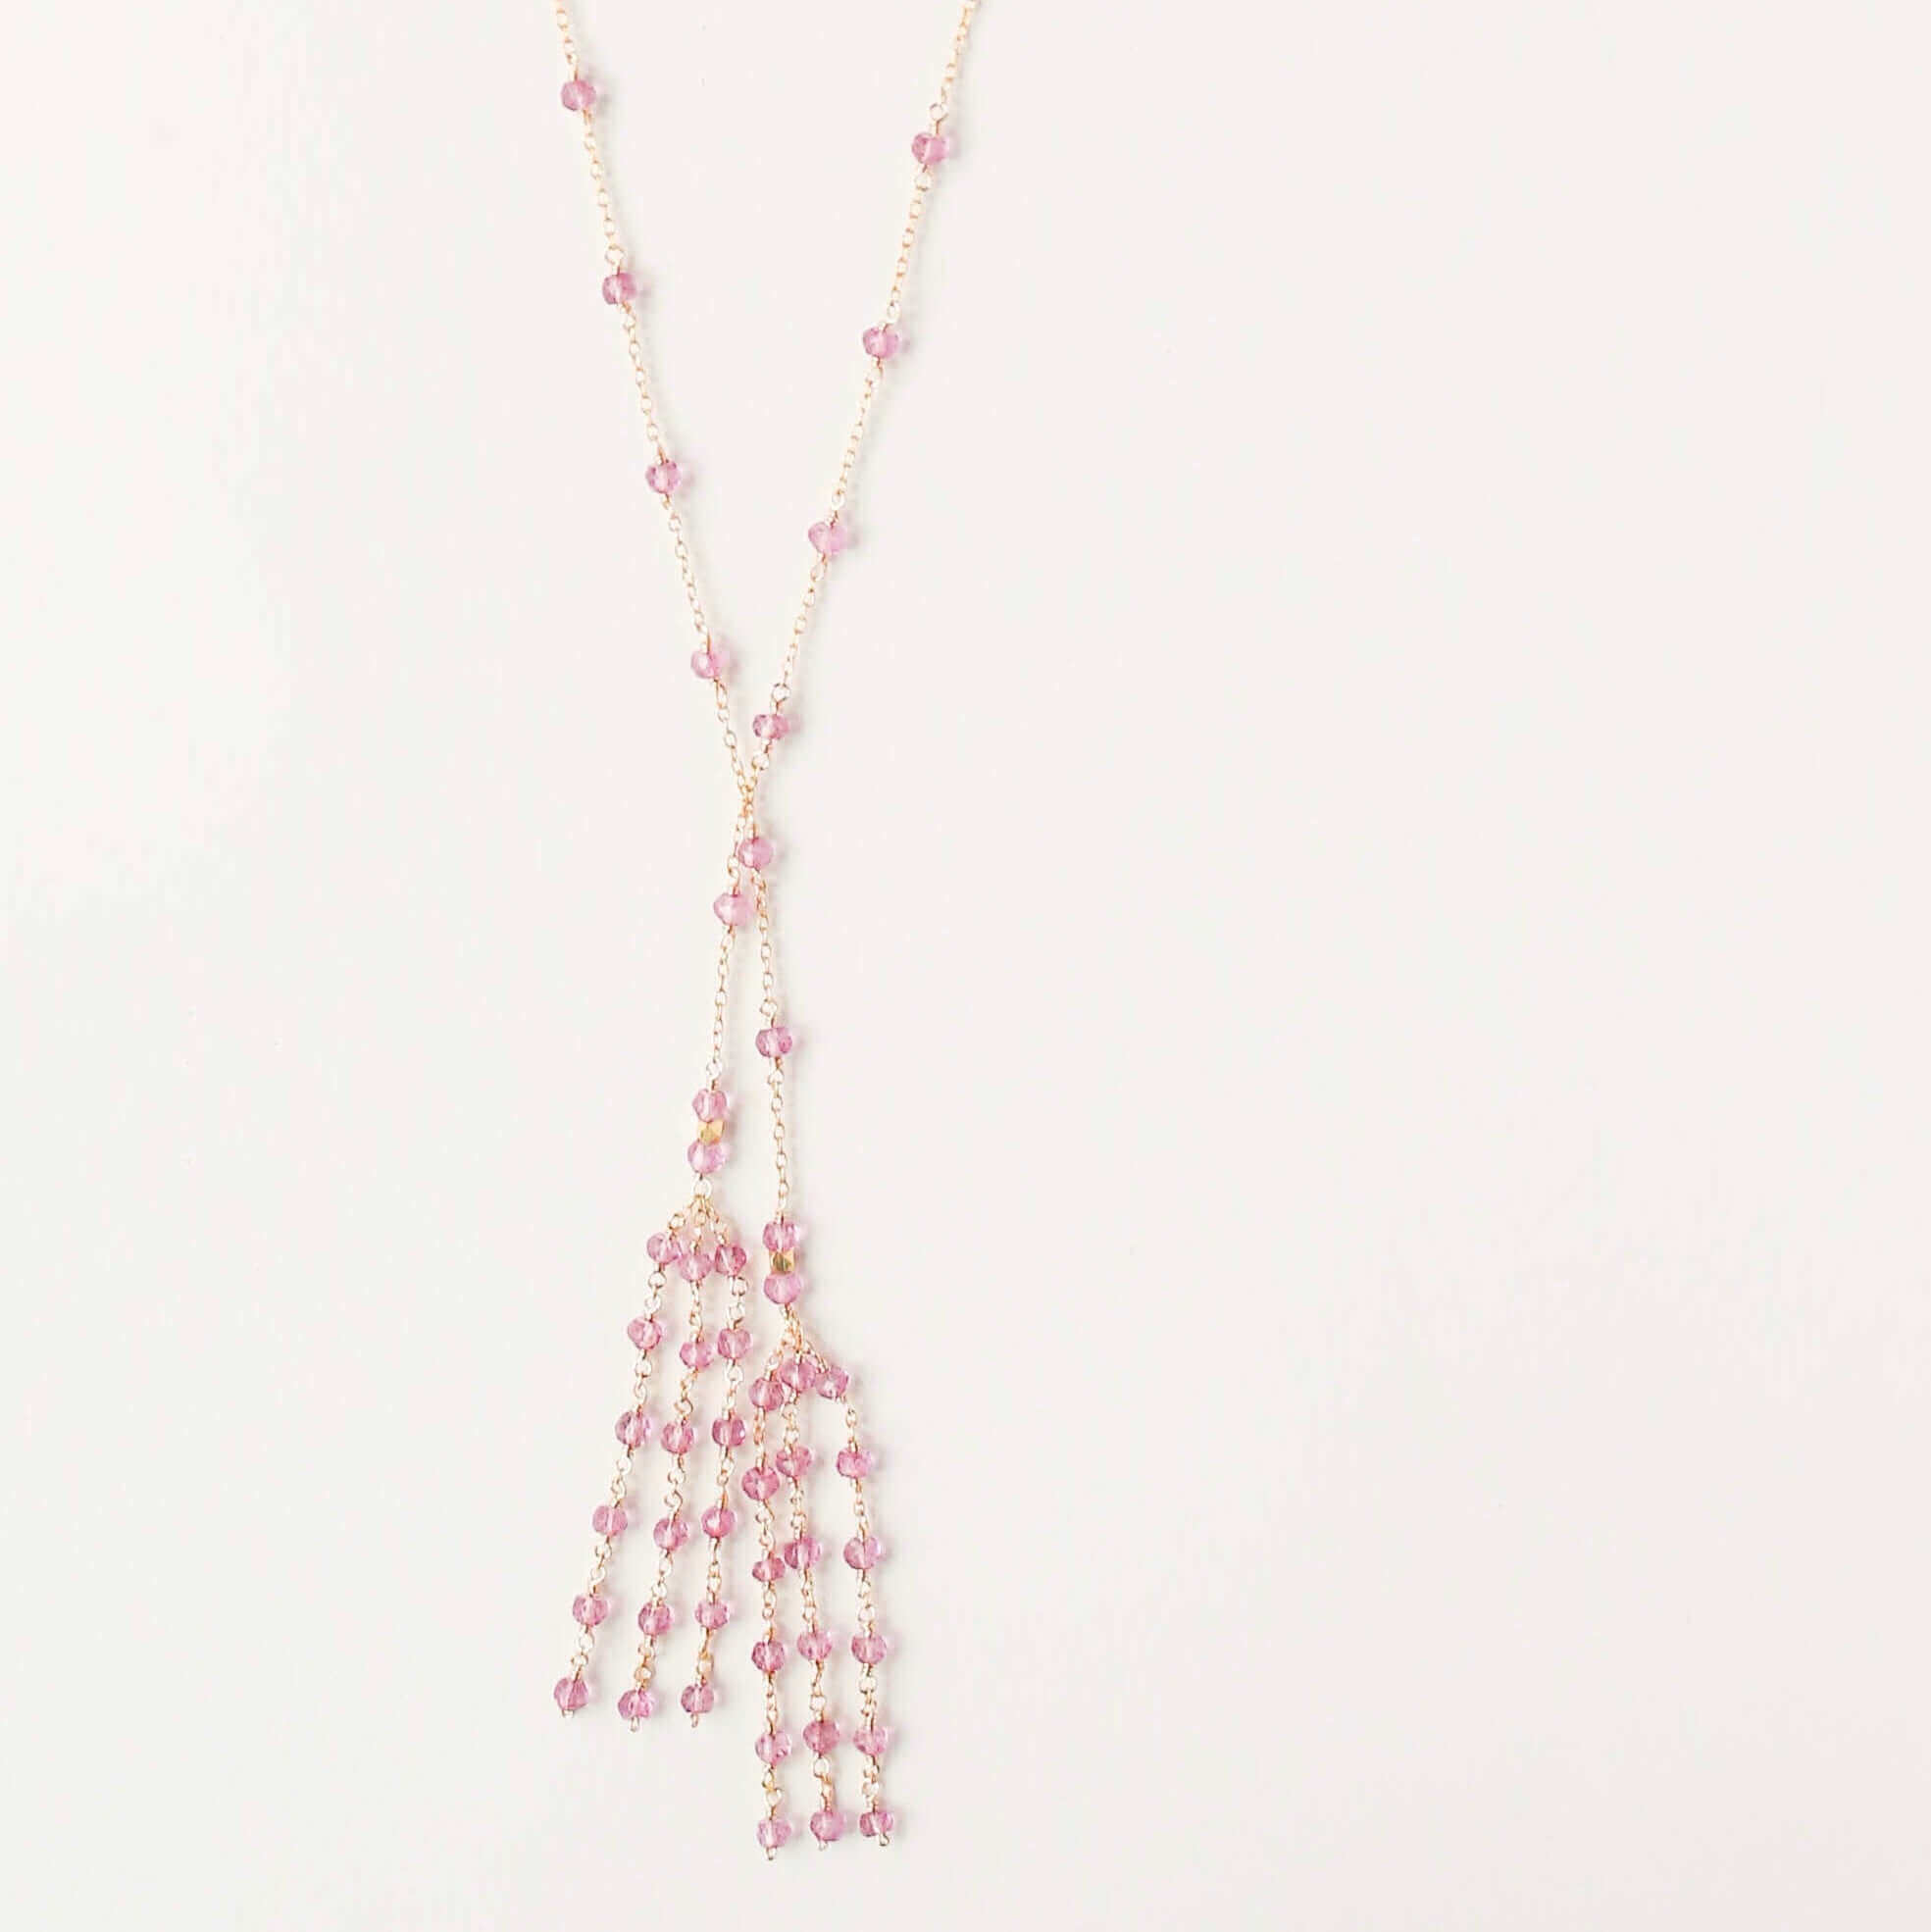 Gold Handmade Lariat Necklace Featuring Pink Tourmaline Gemstones